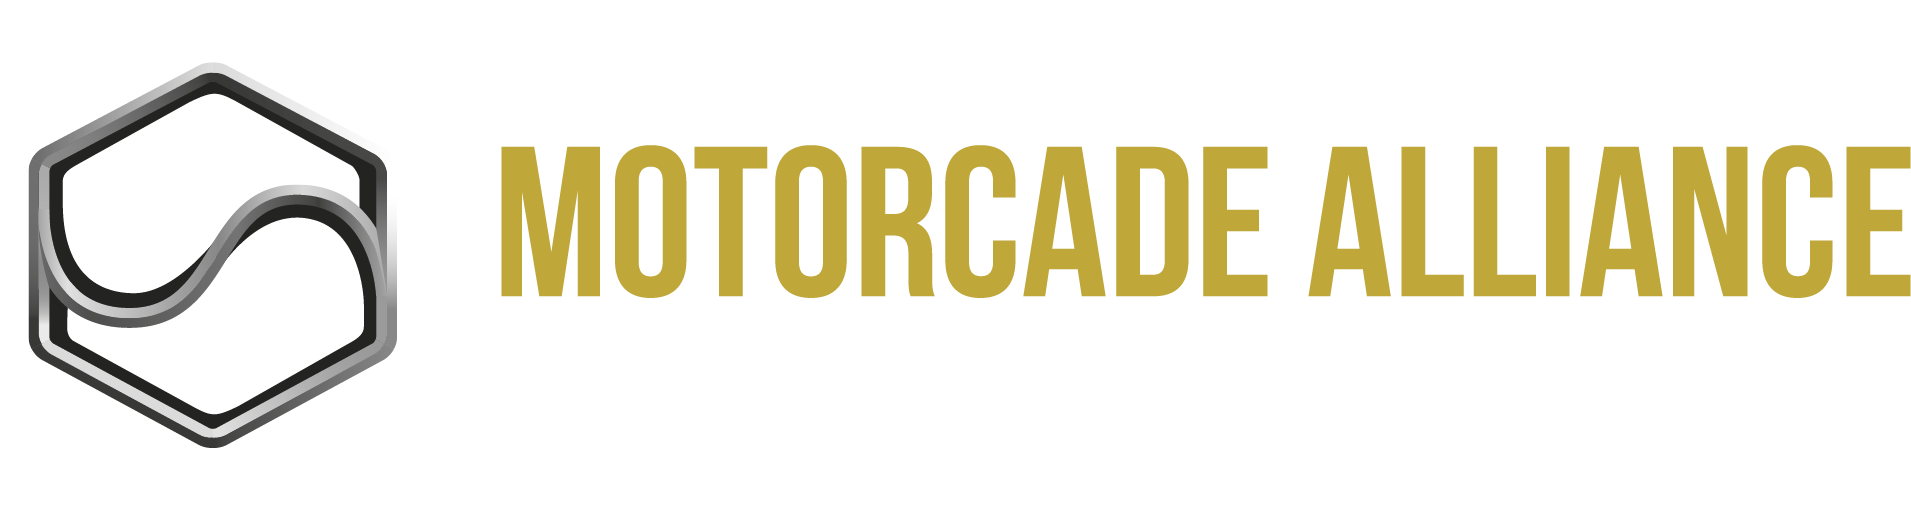 logotipo-motorcade-alliance